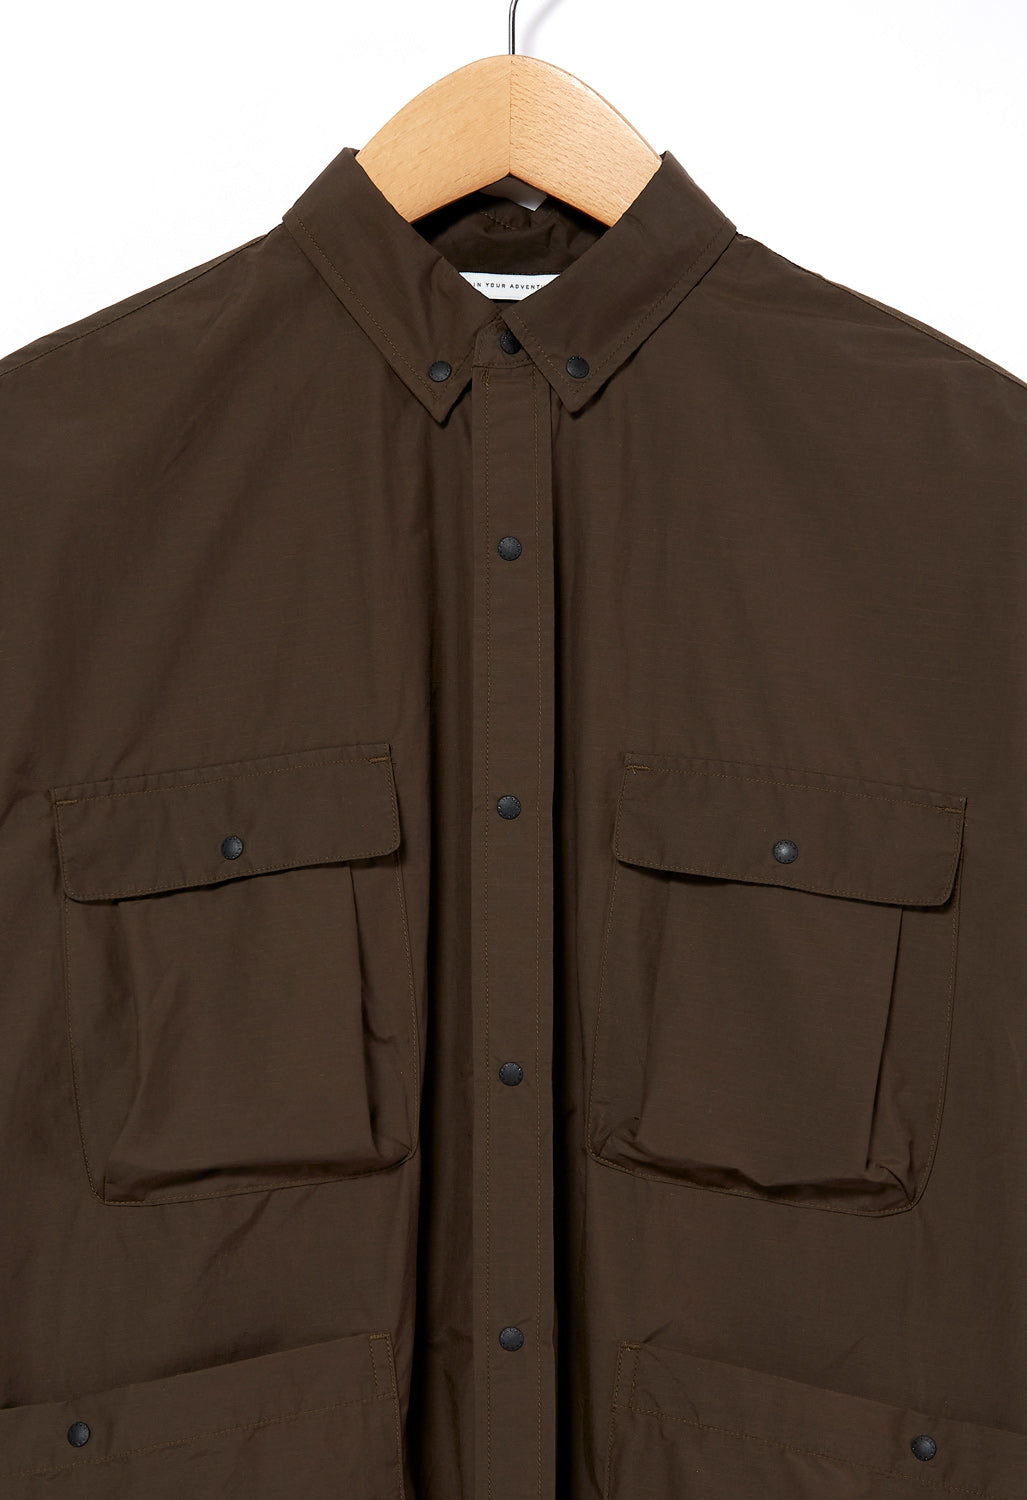 Nanga Men's Cotton / Nylon Ripstop Camp Shirt - Dark Brown